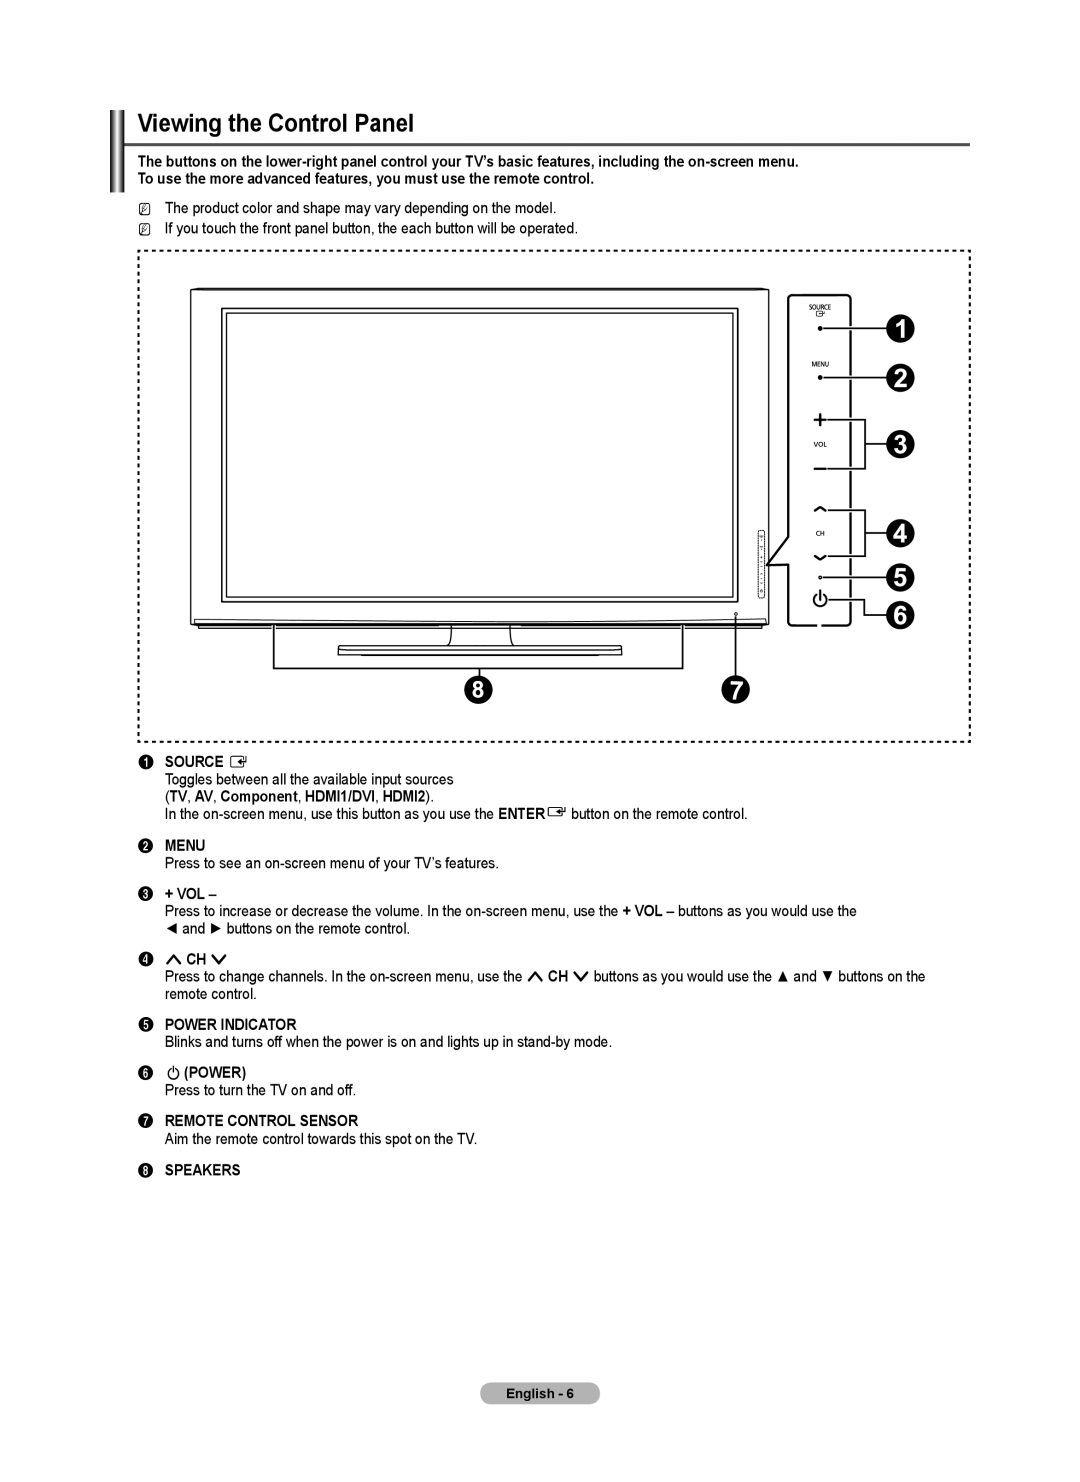 Samsung BN68-02426A-00 user manual Source E, Menu, 3 + VOL, 4 CH, Power Indicator, P Power, Remote Control Sensor, Speakers 